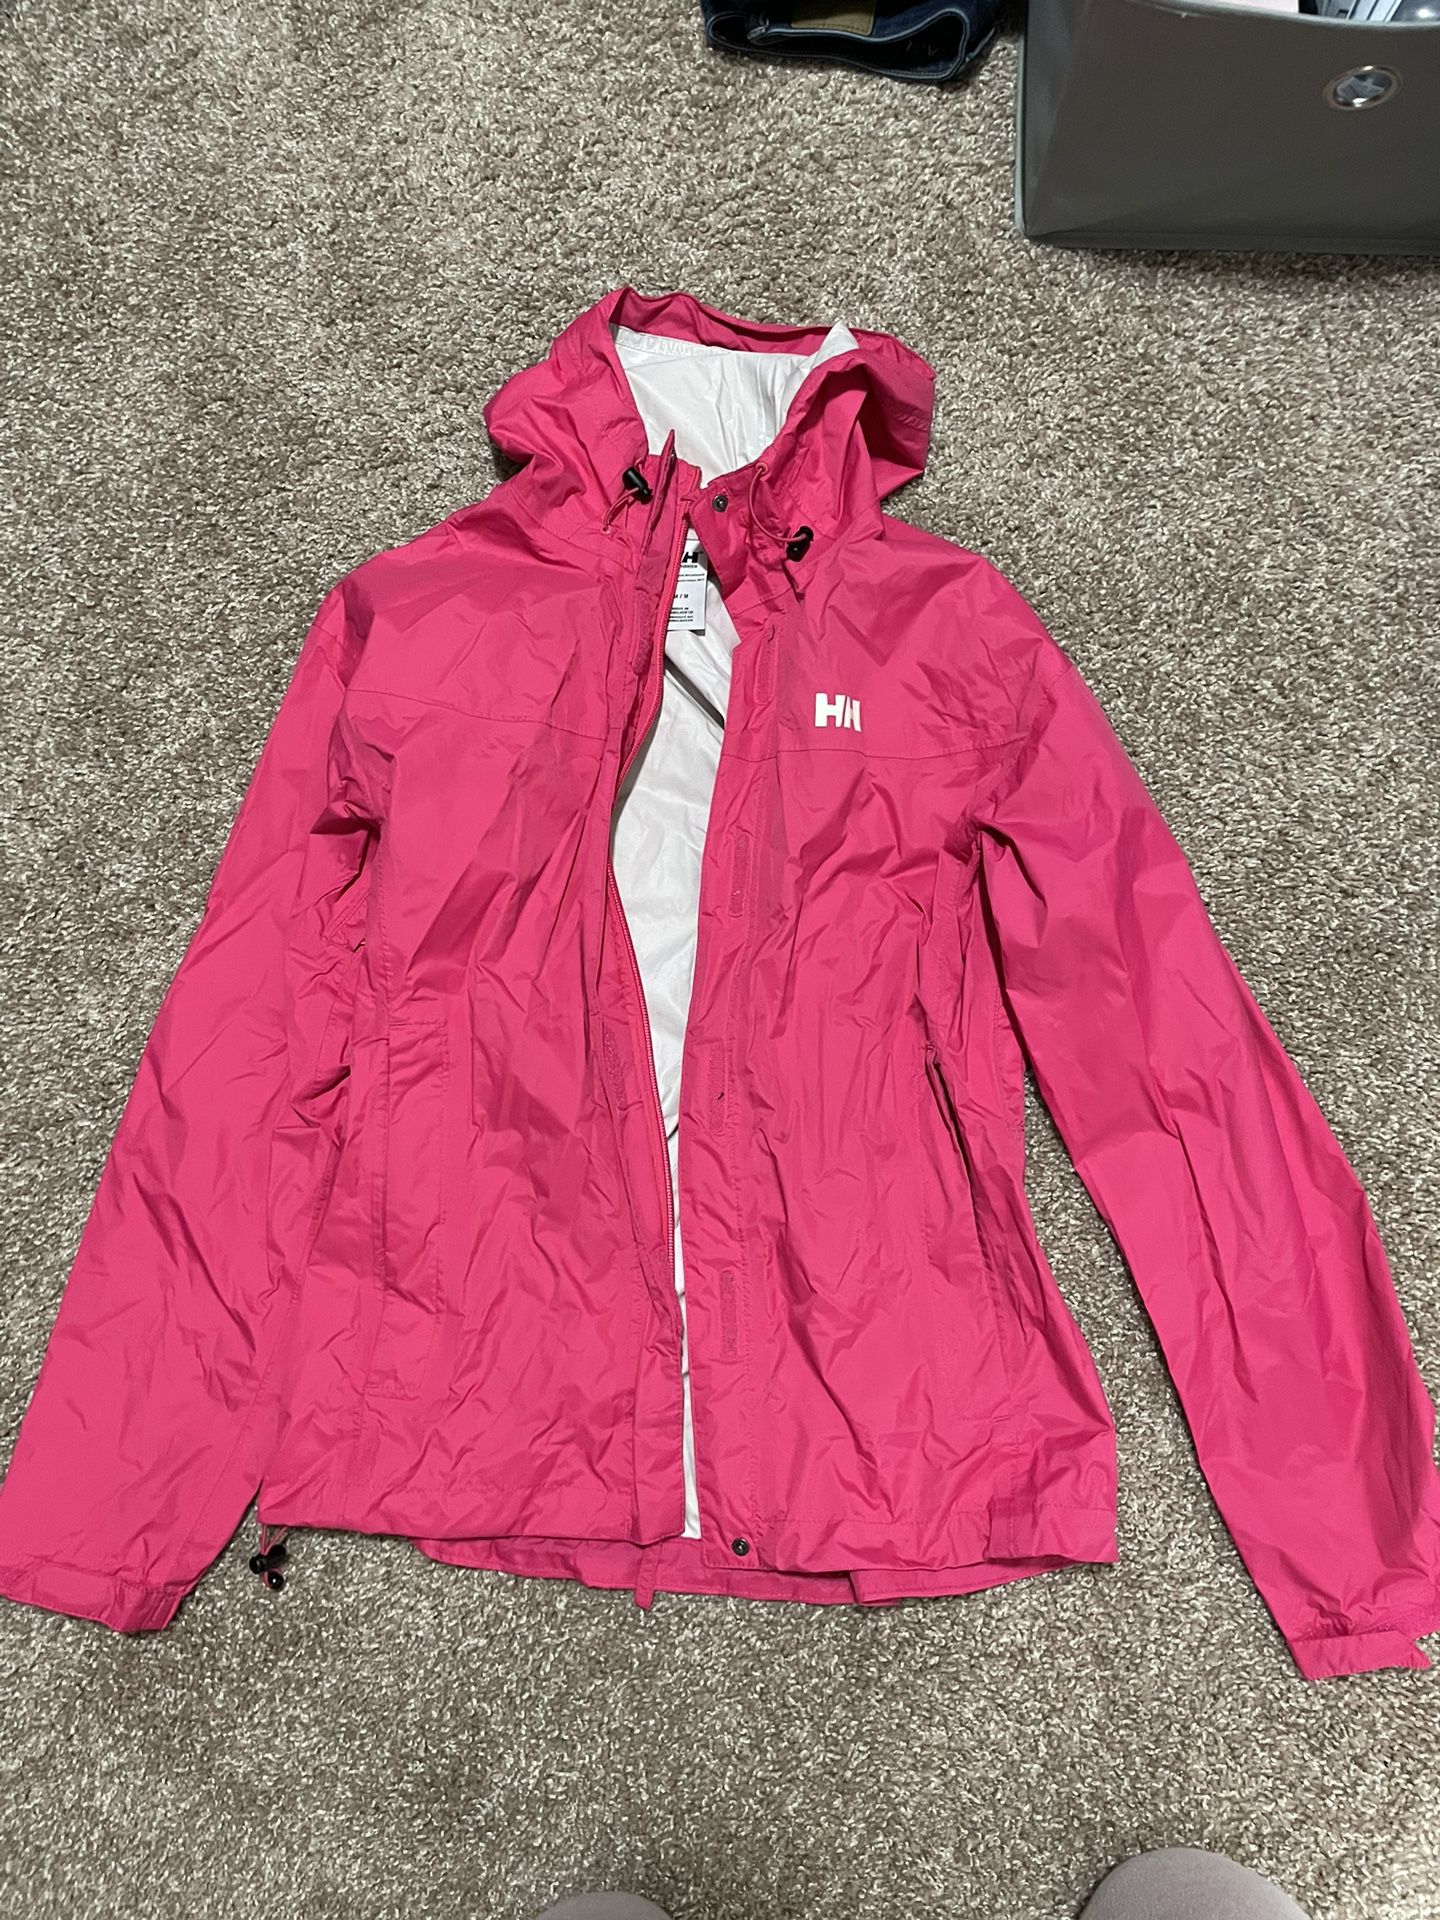 Pink Helly Hanson Women’s Rain Jacket, Medium